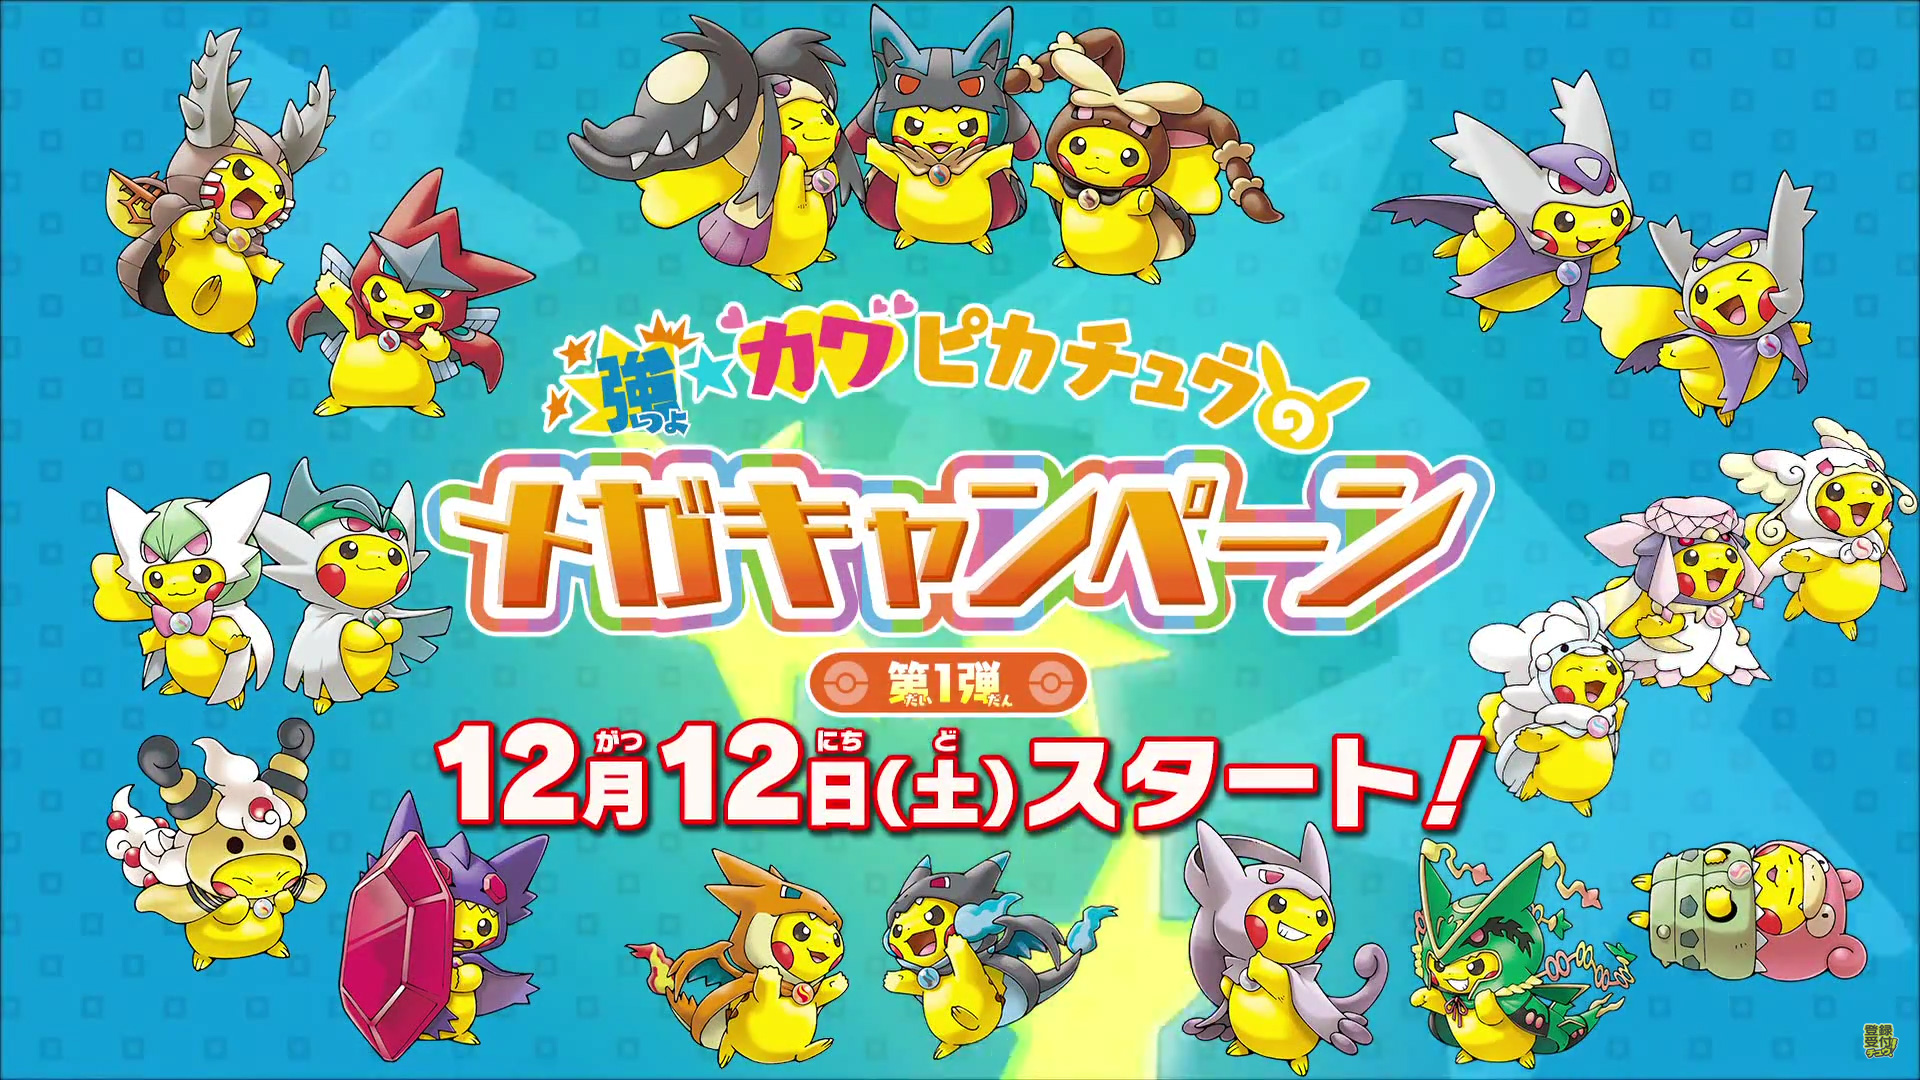 pokemon mega evolution pikachu